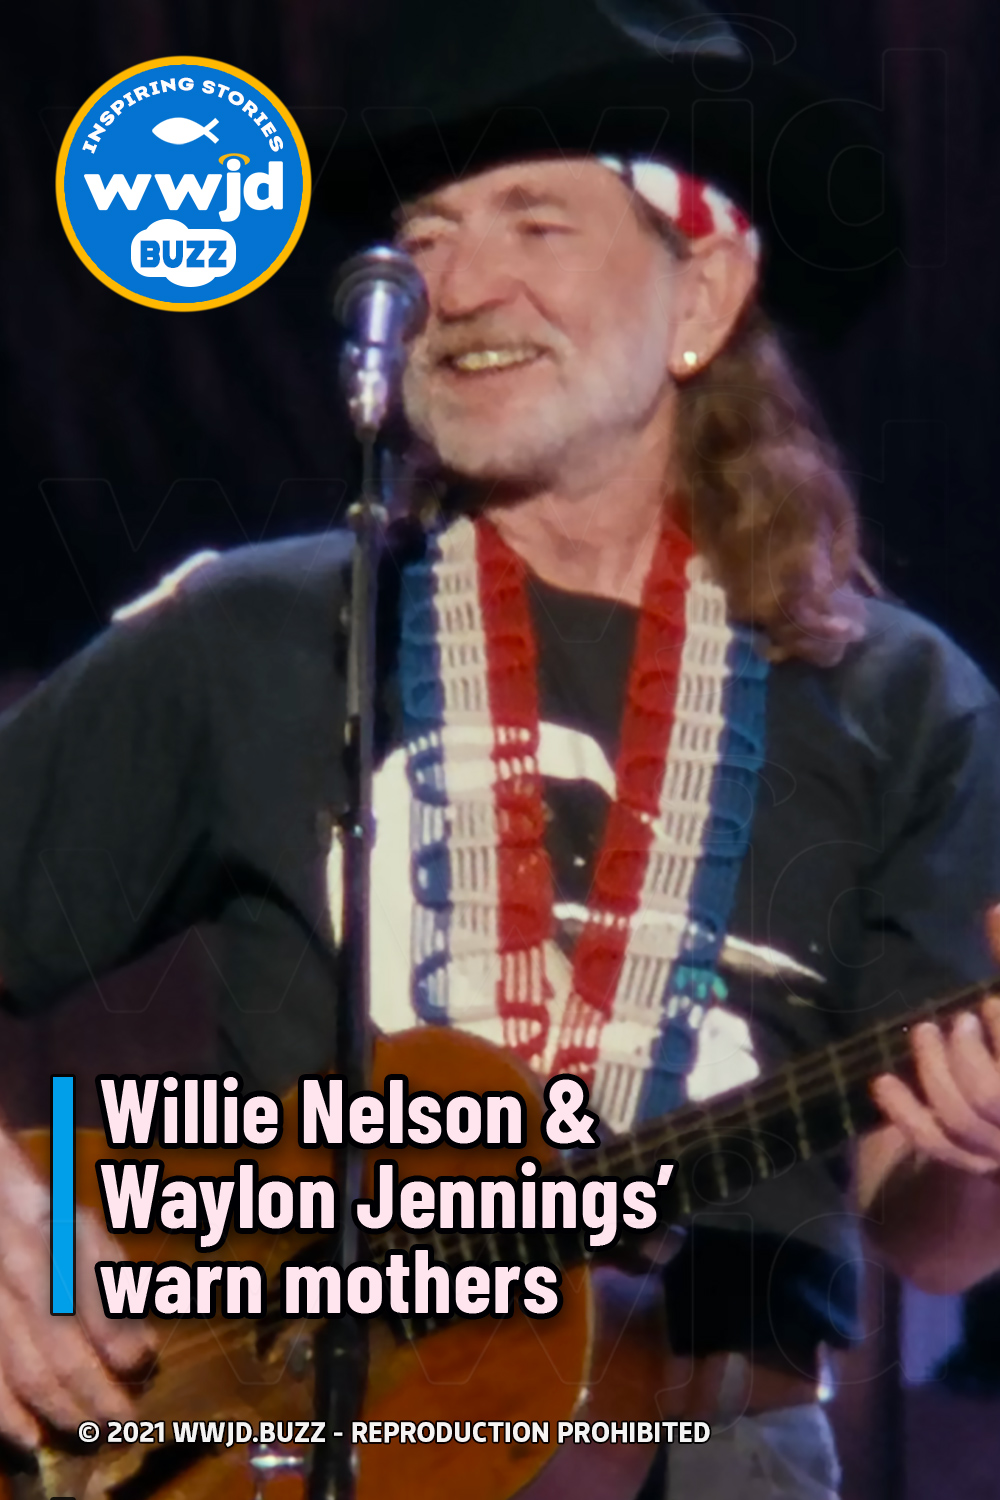 Willie Nelson & Waylon Jennings’ warn mothers